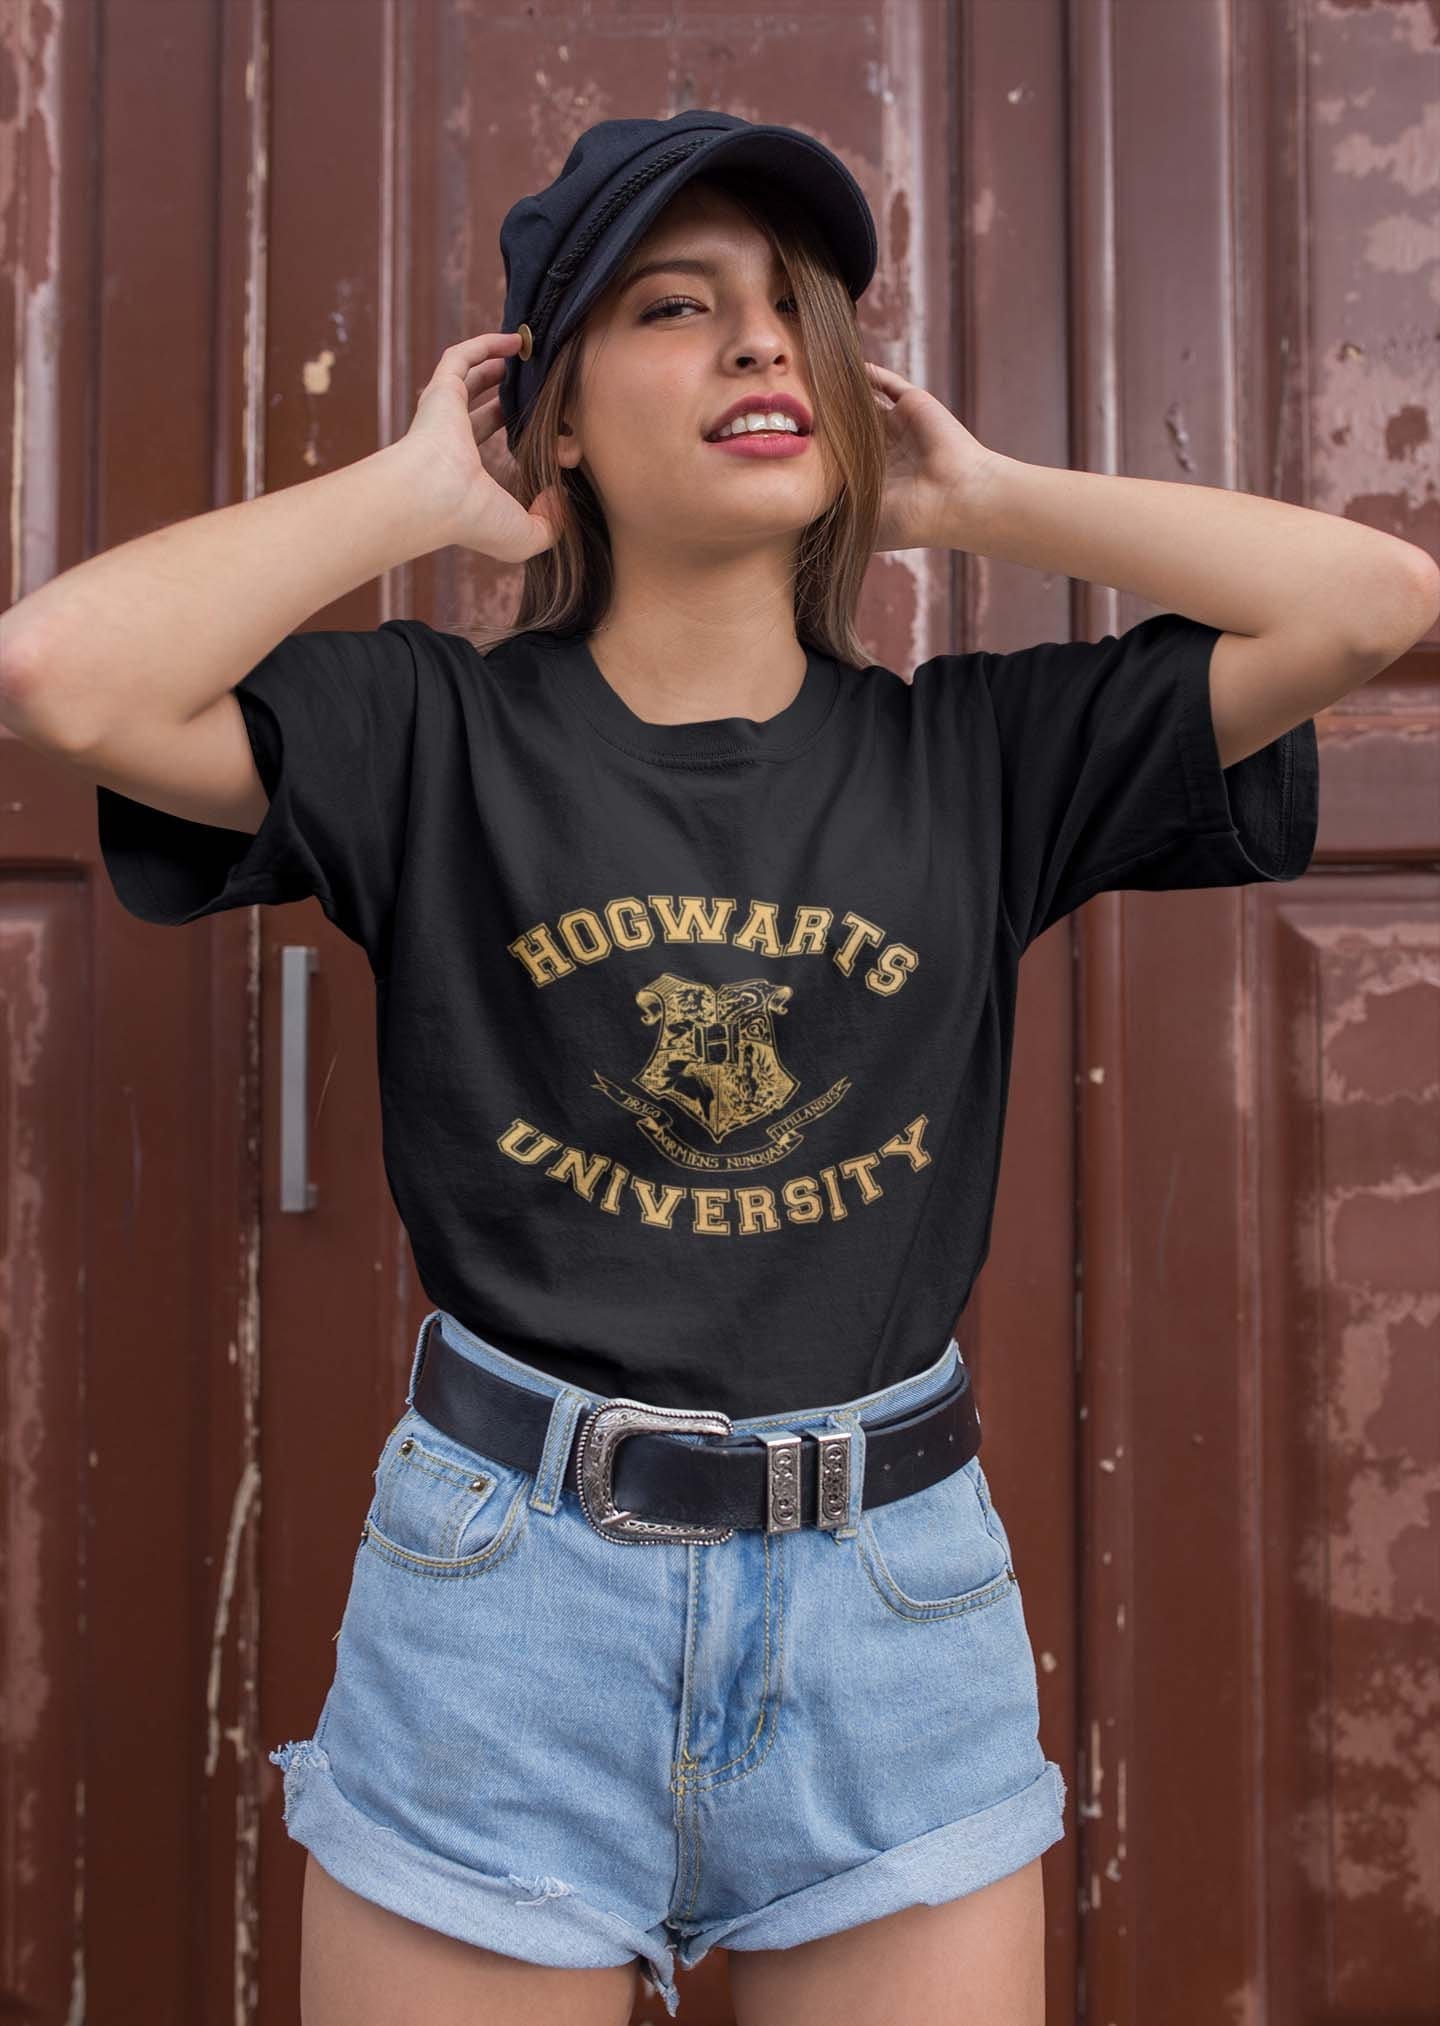 Discover Hogwarts University Wizard Party Harry Potter T-Shirt